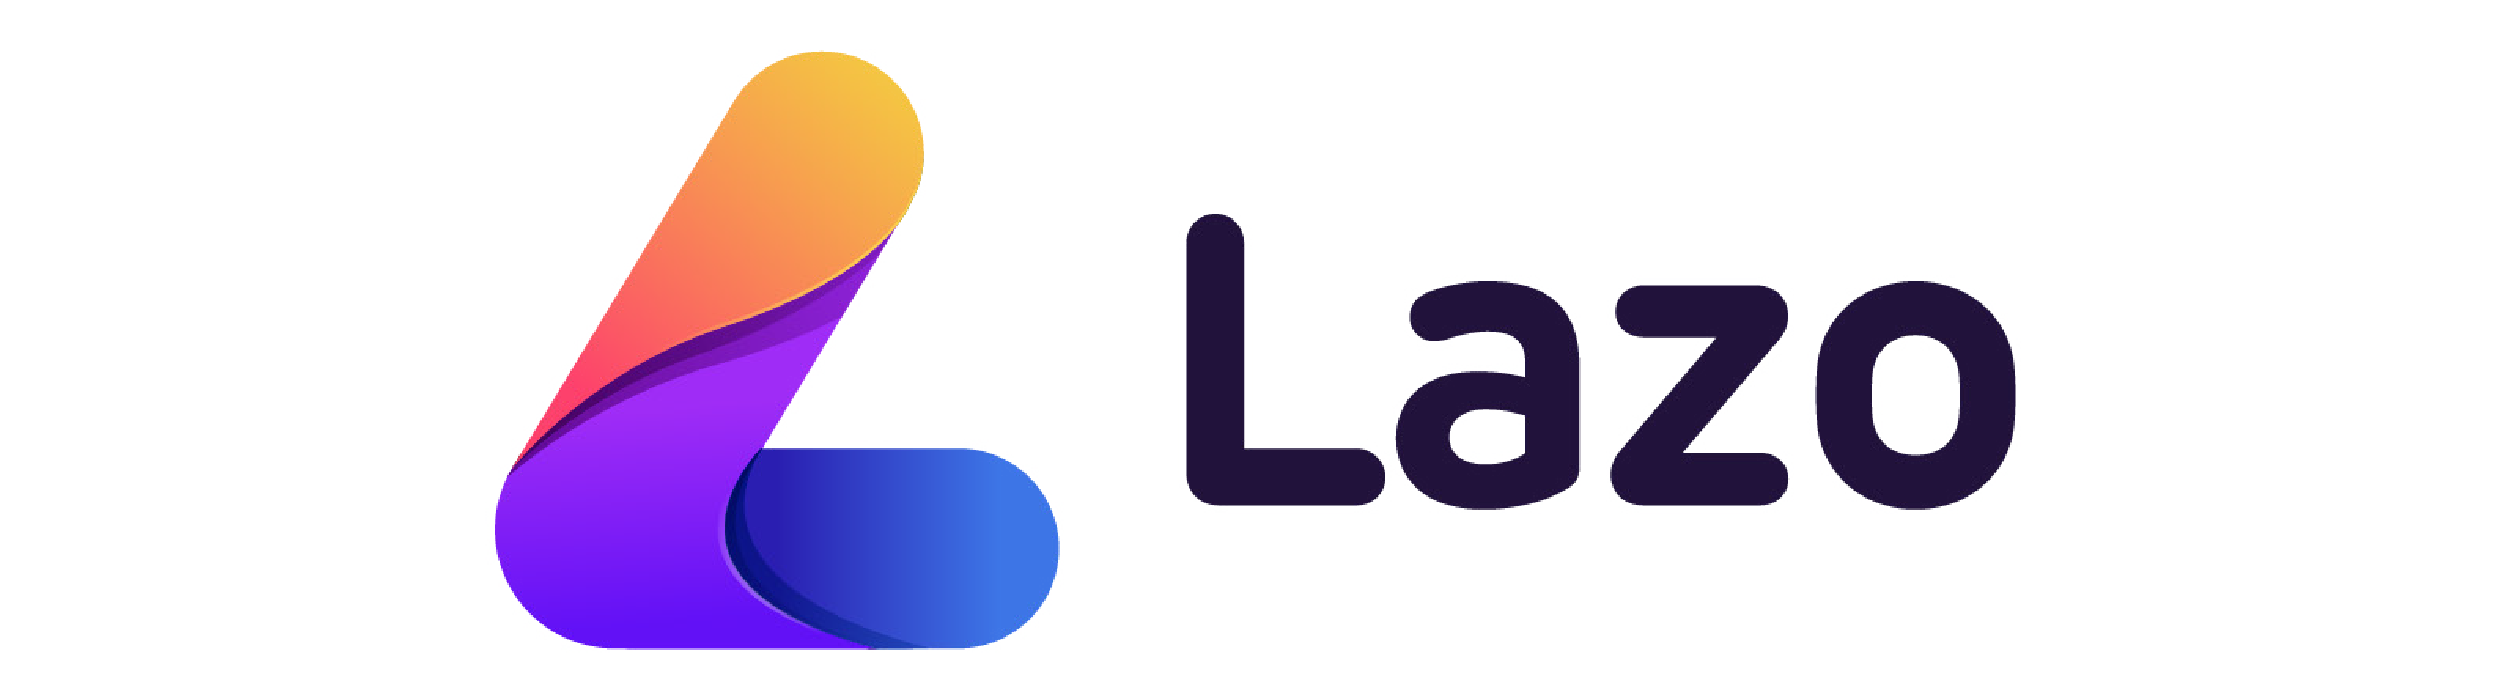 Lazo-logo